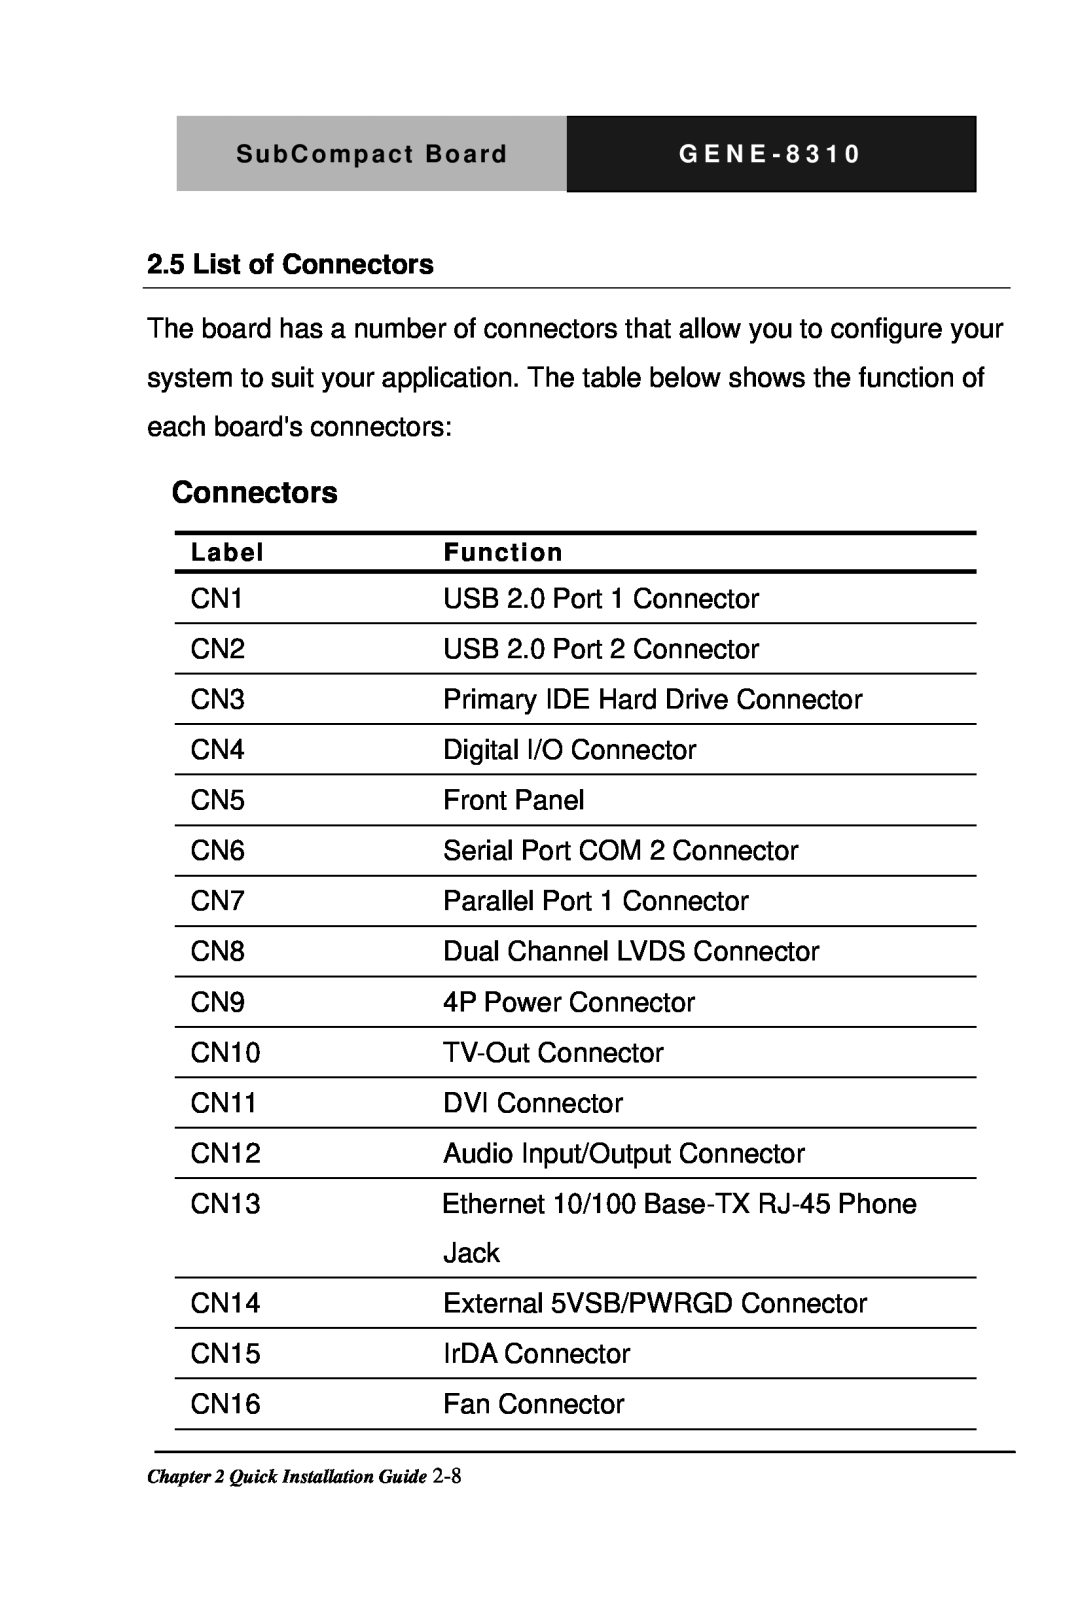 Intel GENE-8310 manual List of Connectors 